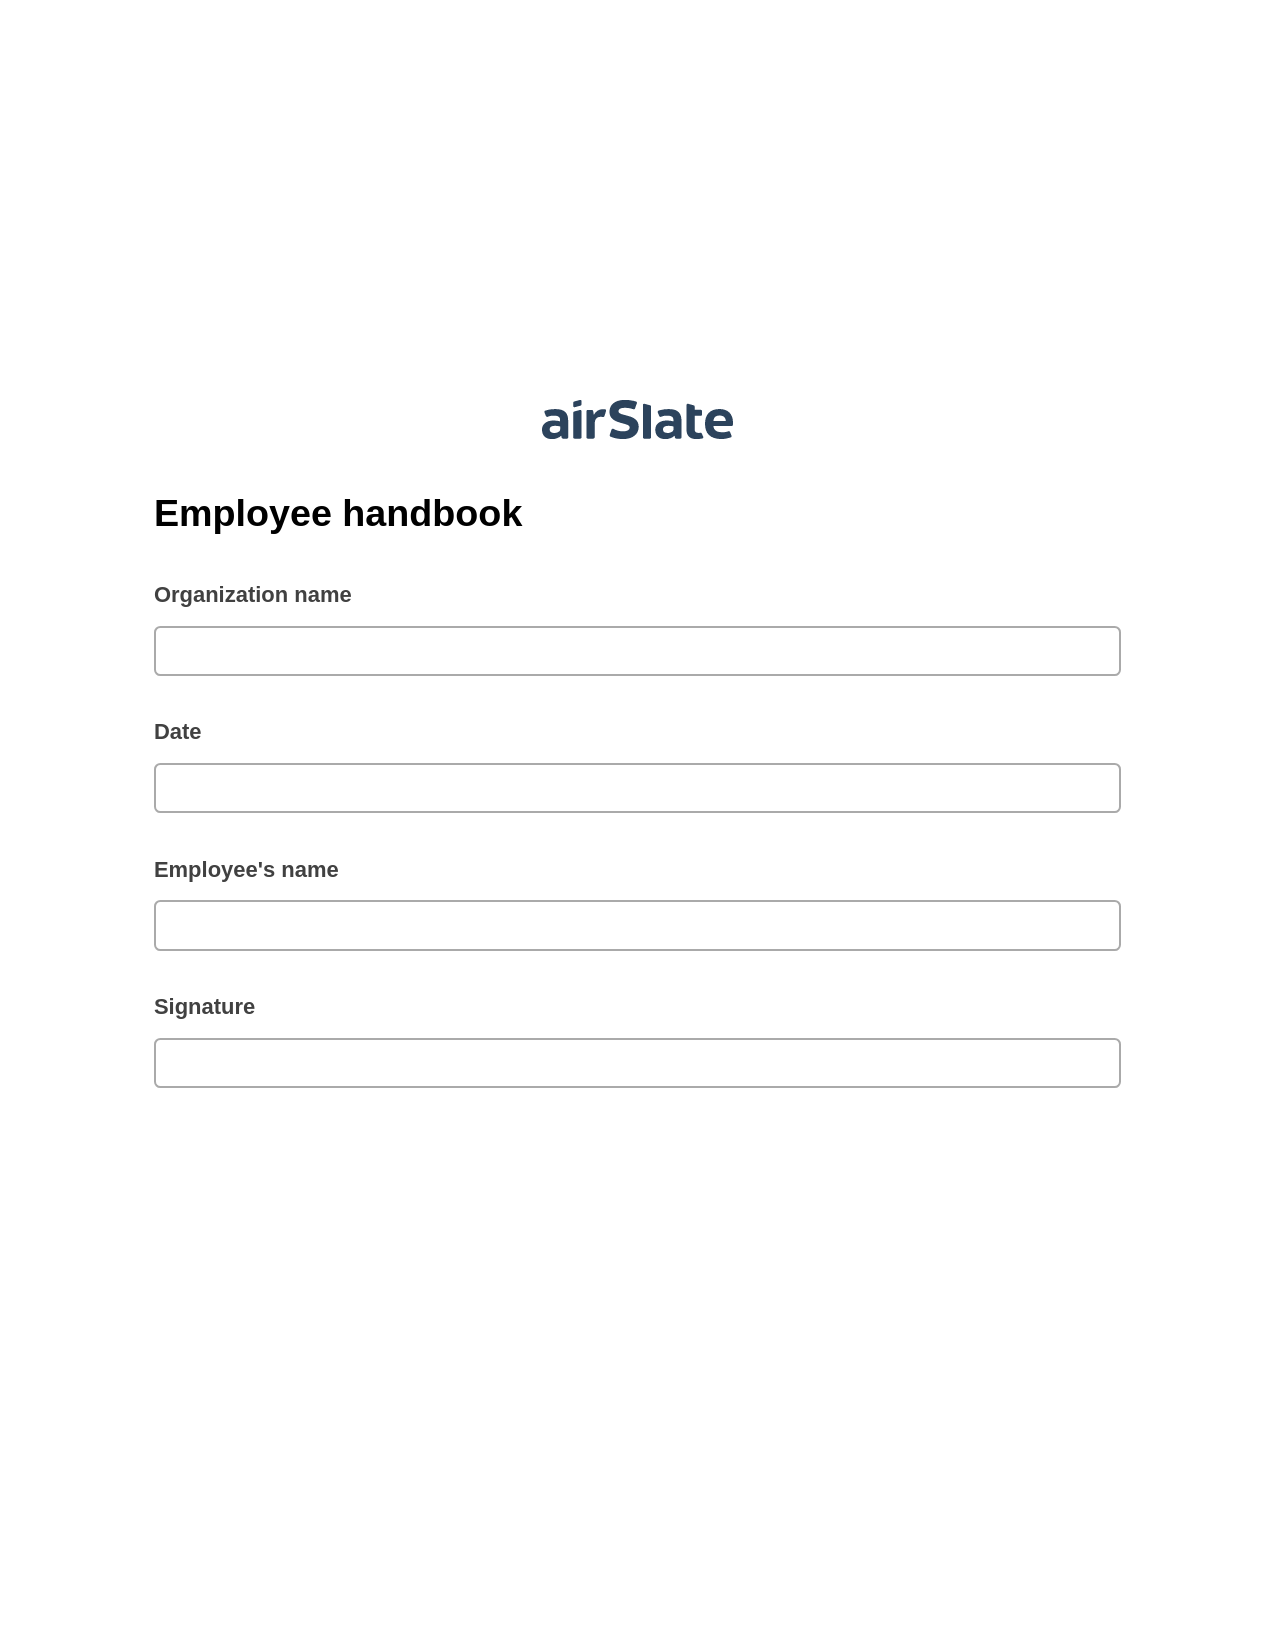 Multirole Employee handbook Pre-fill from NetSuite Records Bot, Hide Signatures Bot, Google Drive Bot